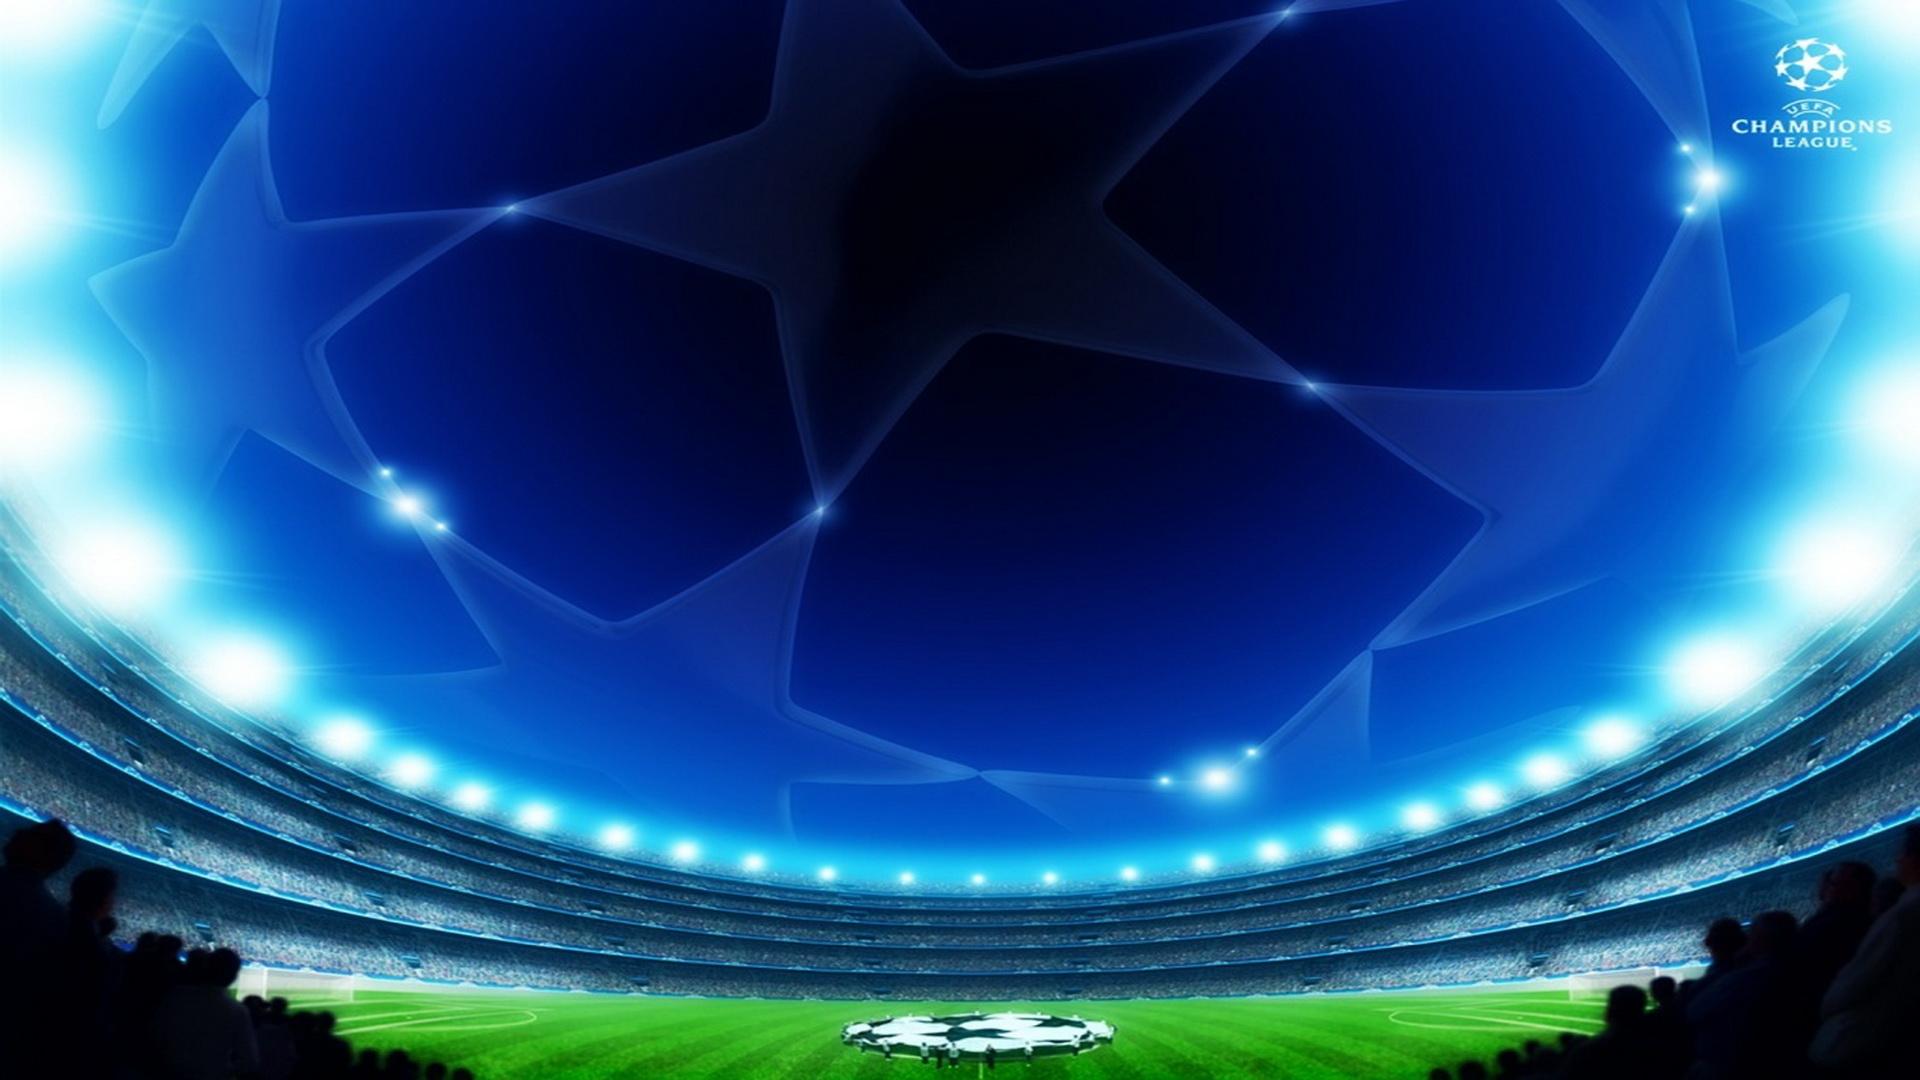 UEFA Champions League Wallpaper HD